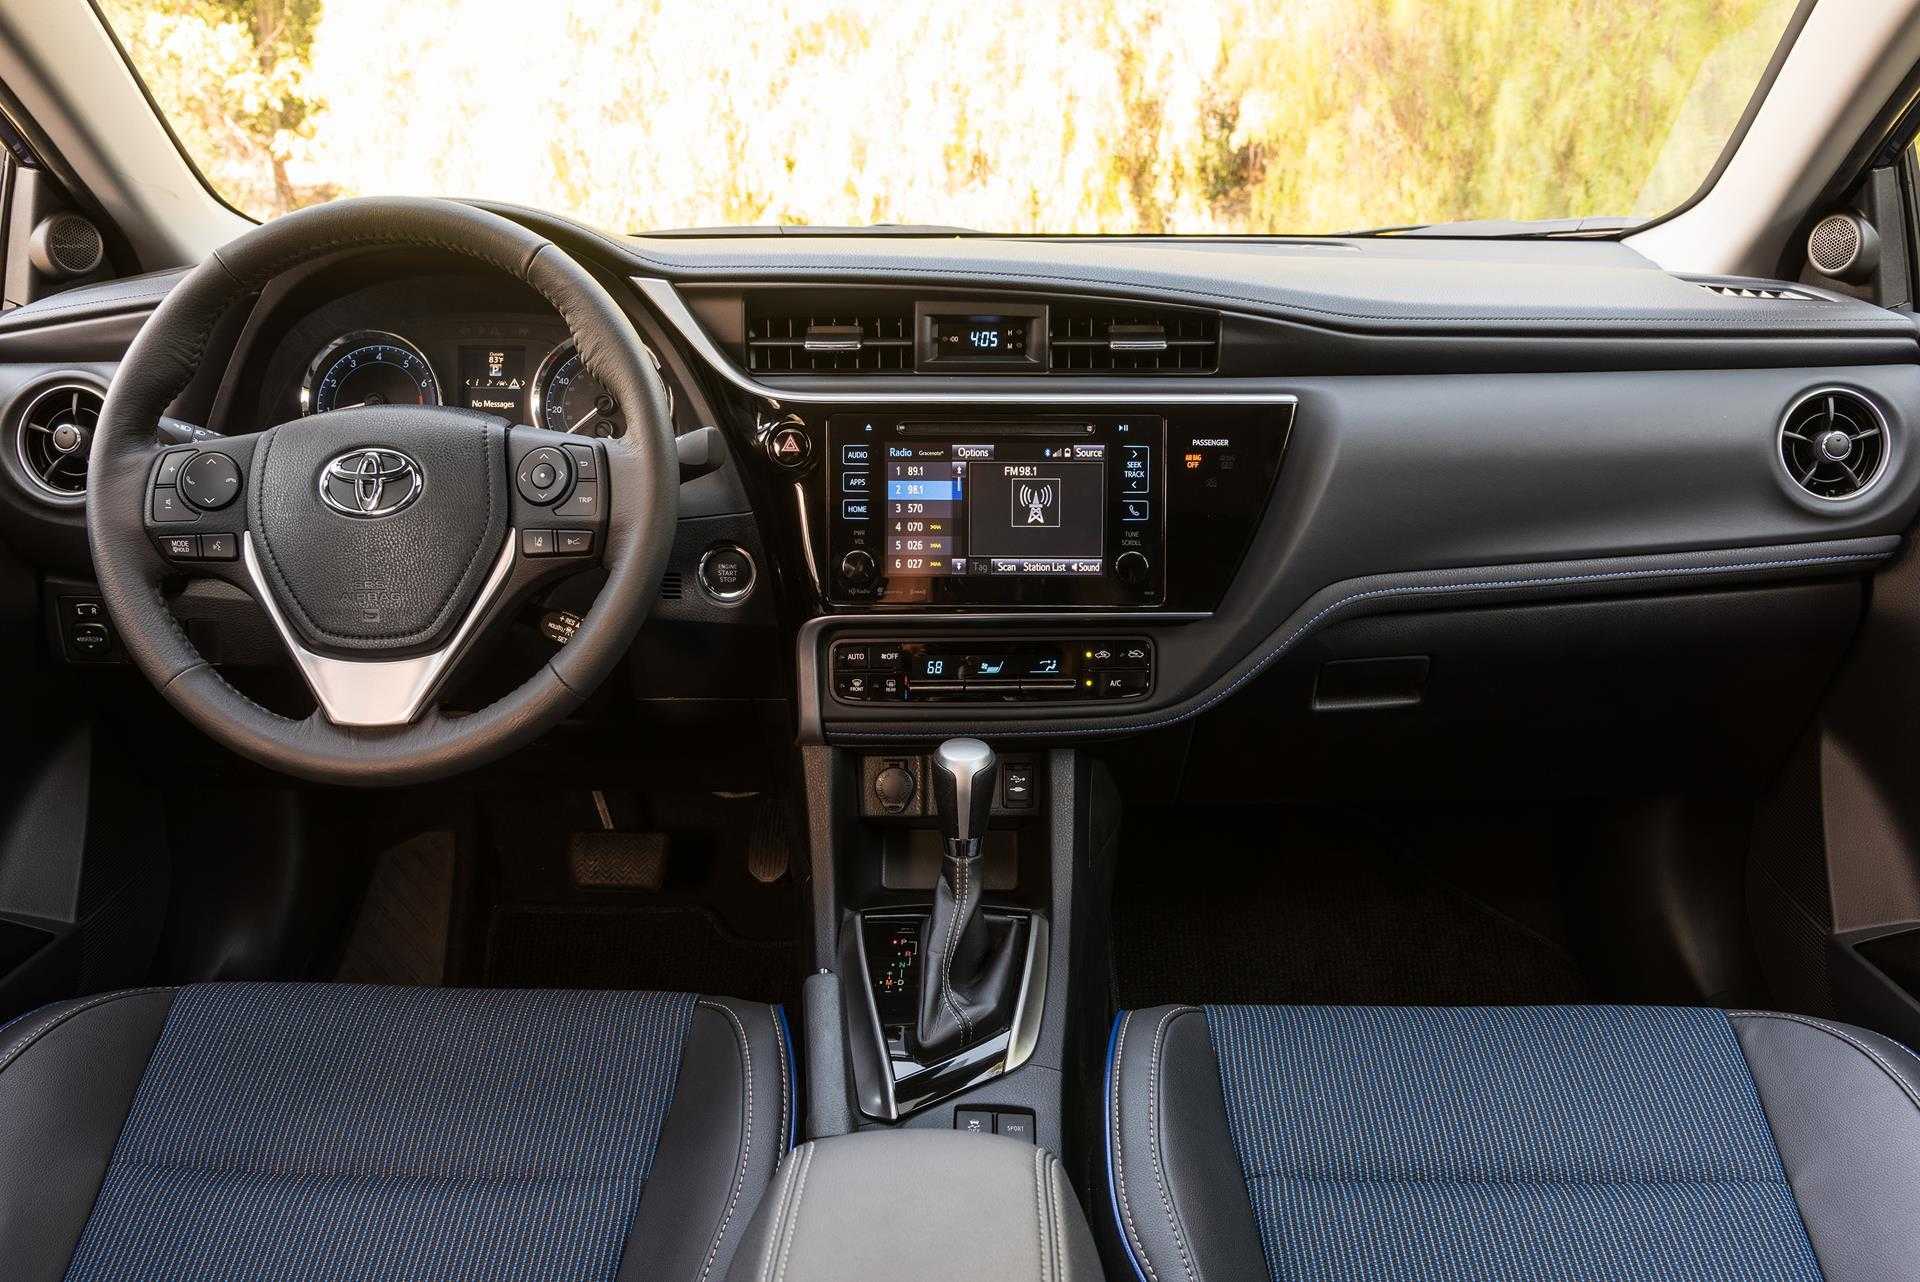 Toyota corolla 1.6 cvt элеганс (09.2013 - 06.2015) - технические характеристики